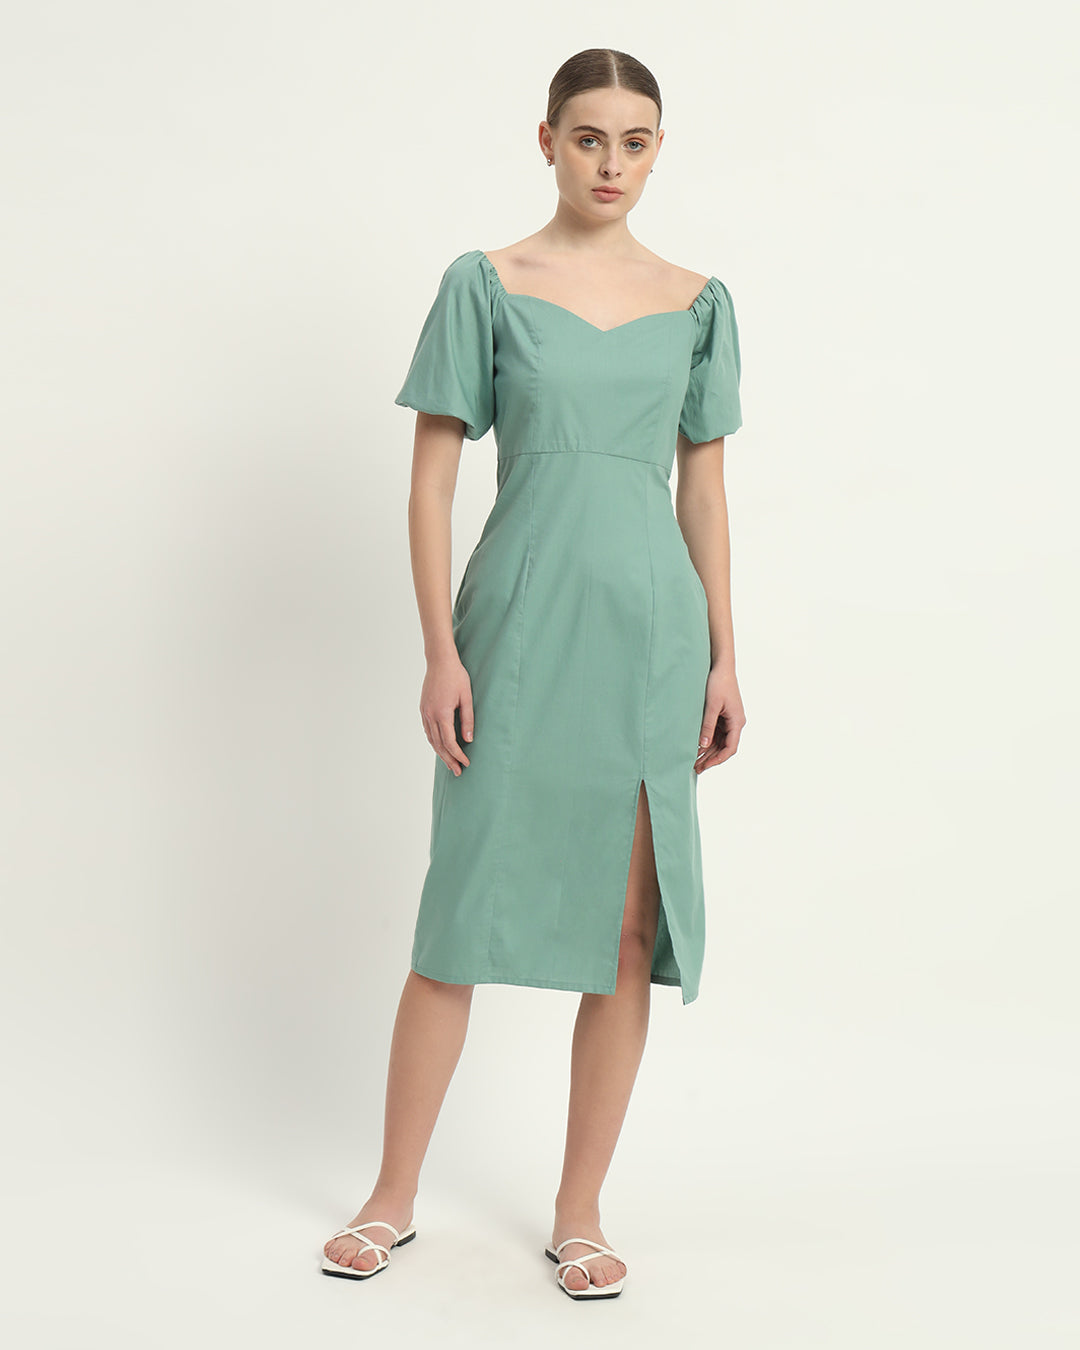 The Erwin Mint Cotton Dress